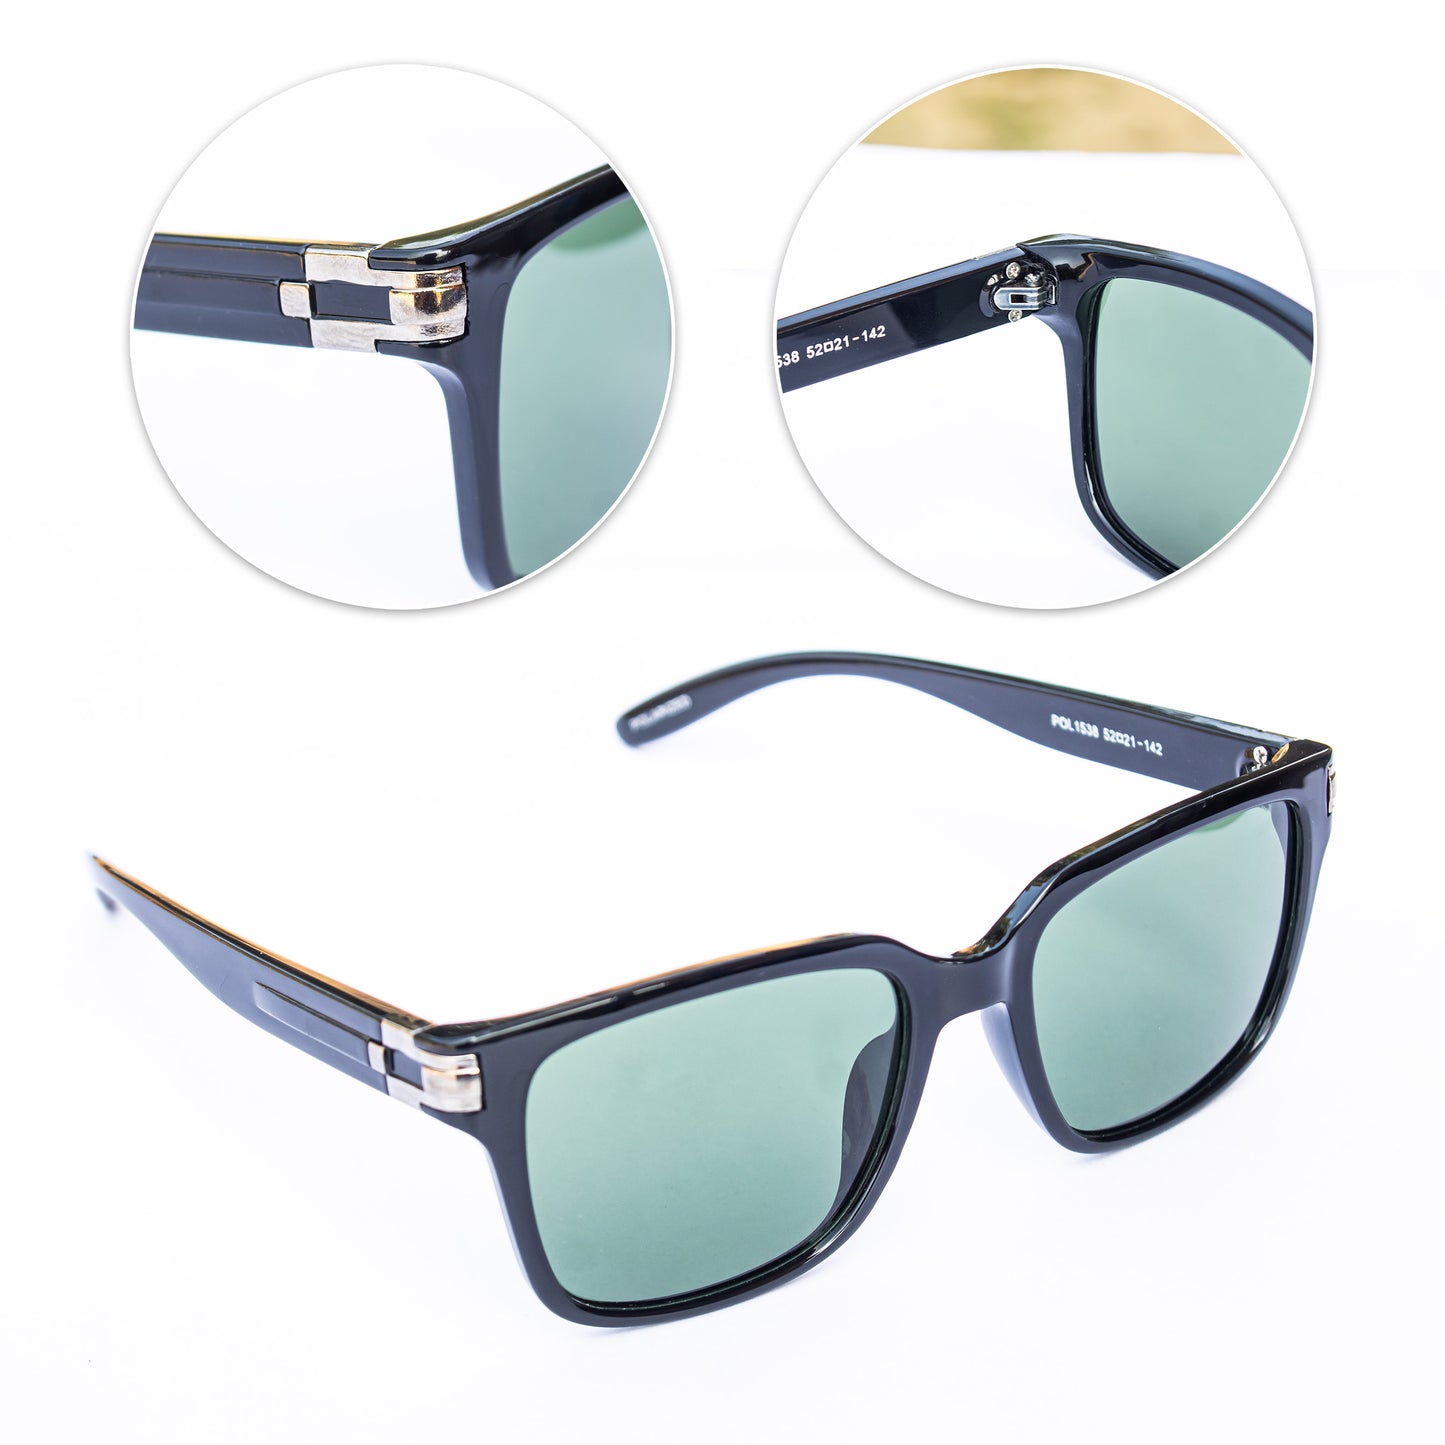 Green Square Polarized Sunglasses For Men